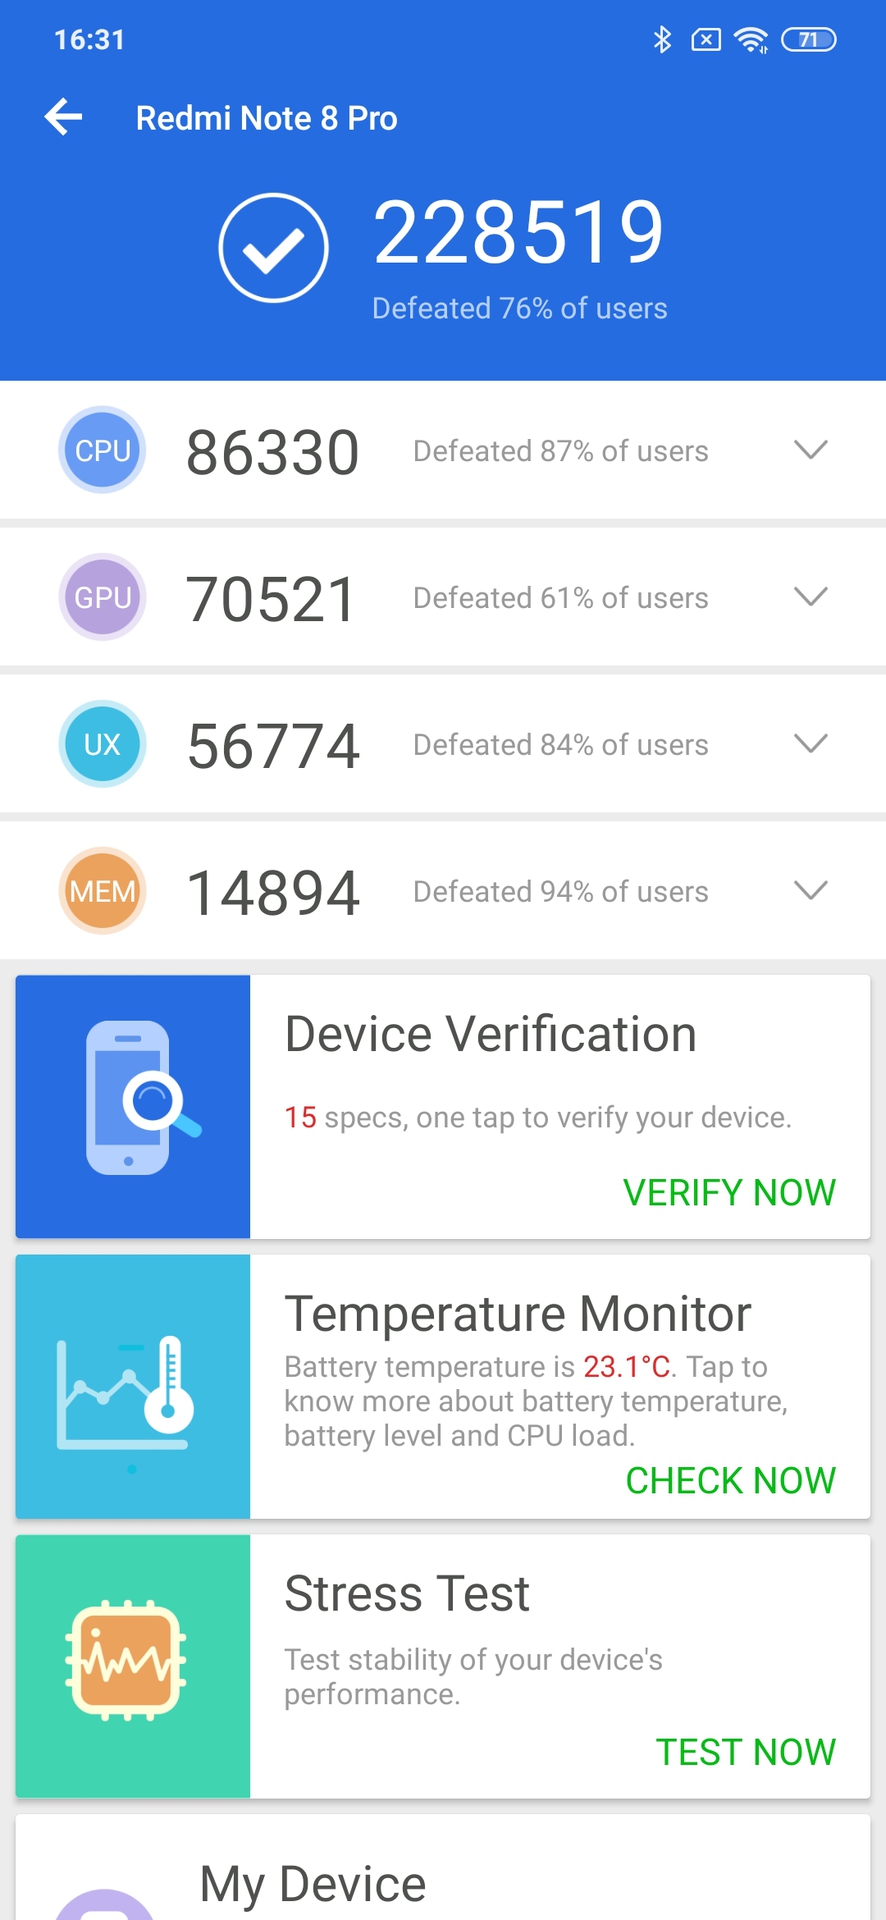 Redmi Note 8 Pro AnTuTu benchmark results